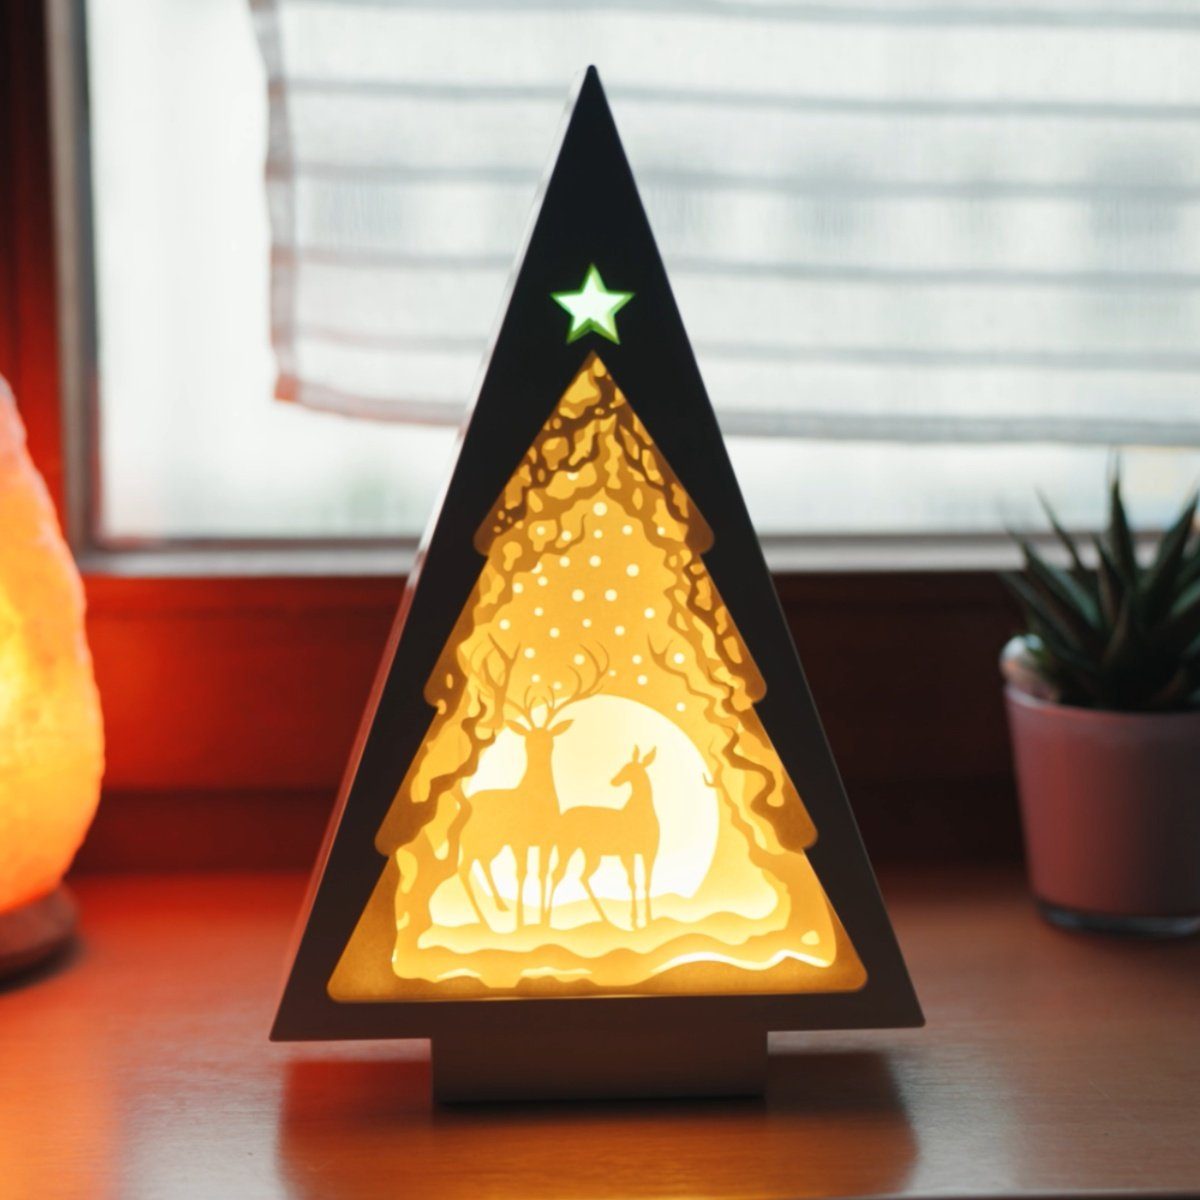 CiM LED Lichtbox 3D Papercut fest Dekoration integriert, Deer Warmweiß, 17x6x26cm, TREE LED Shadowbox, Couple, Wohnaccessoire, Nachtlicht, kabellose 